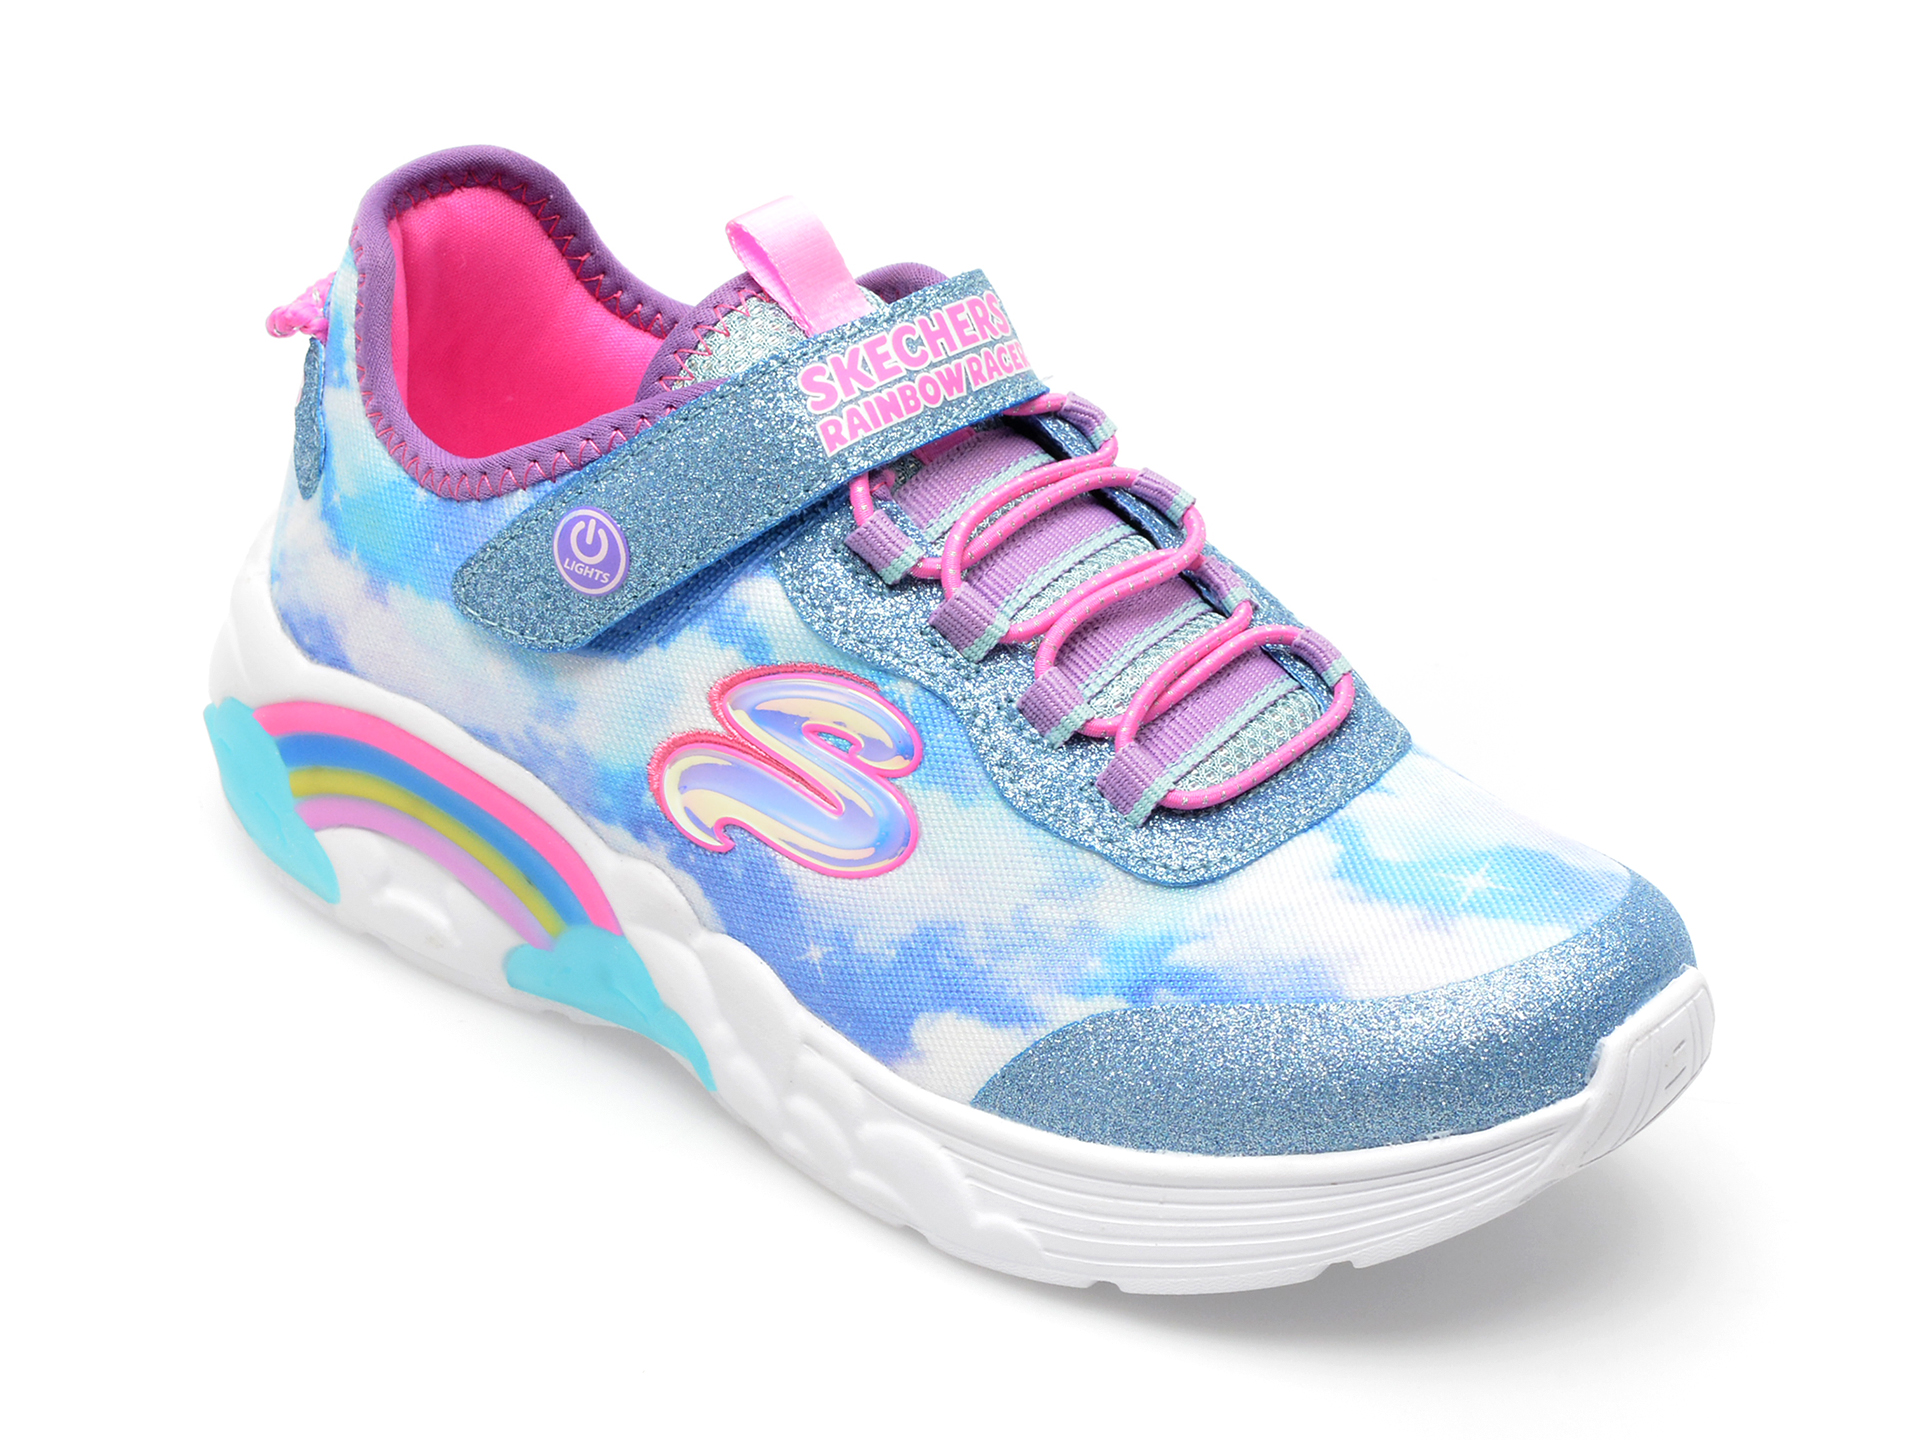 Pantofi SKECHERS albastri, RAINBOW RACER, din piele ecologica si material textil /copii/incaltaminte